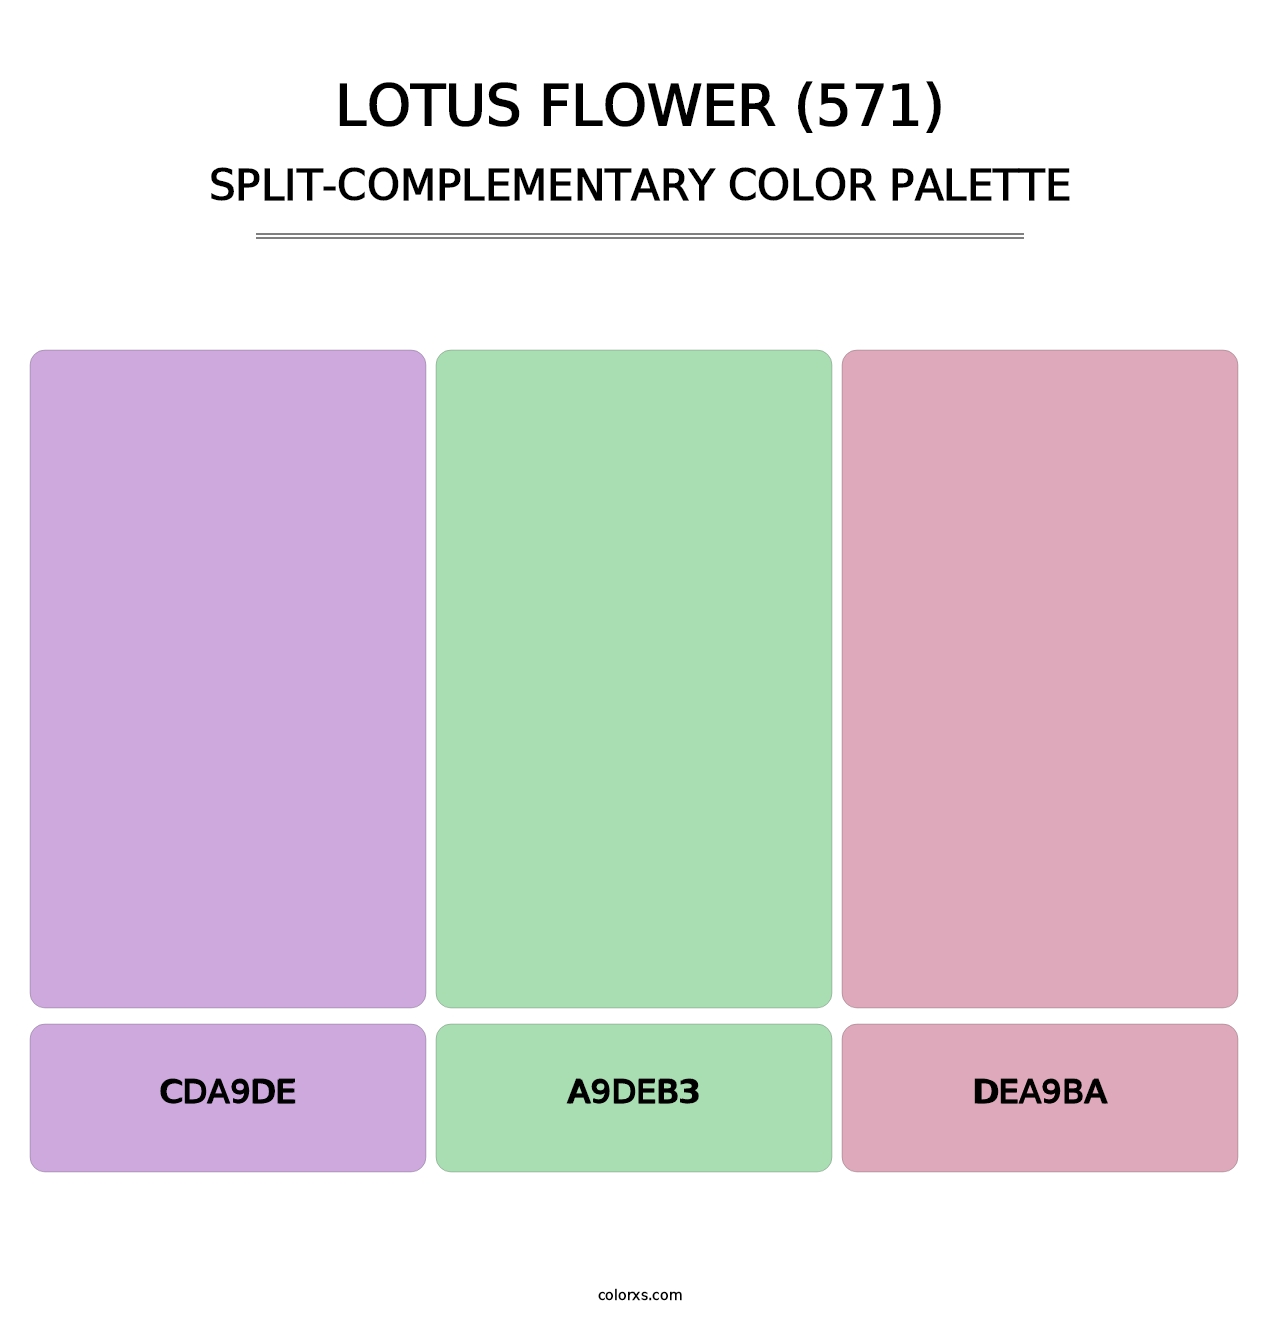 Lotus Flower (571) - Split-Complementary Color Palette